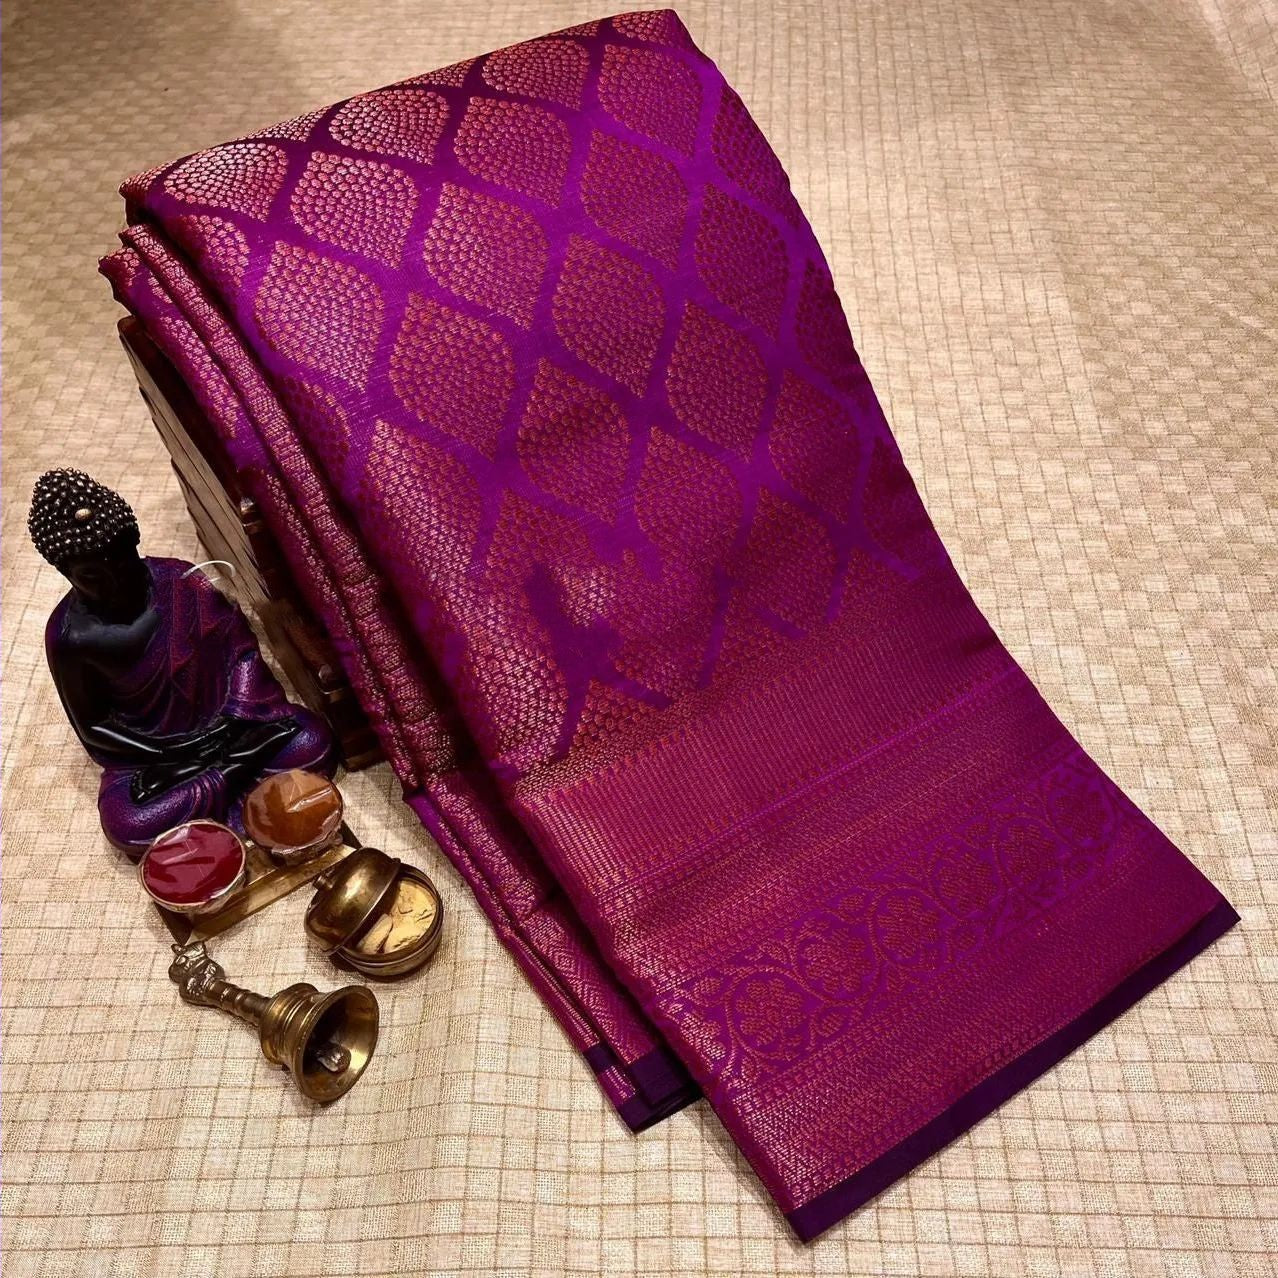 Luxuriant Purple Soft Silk Saree With Supernal Blouse Piece